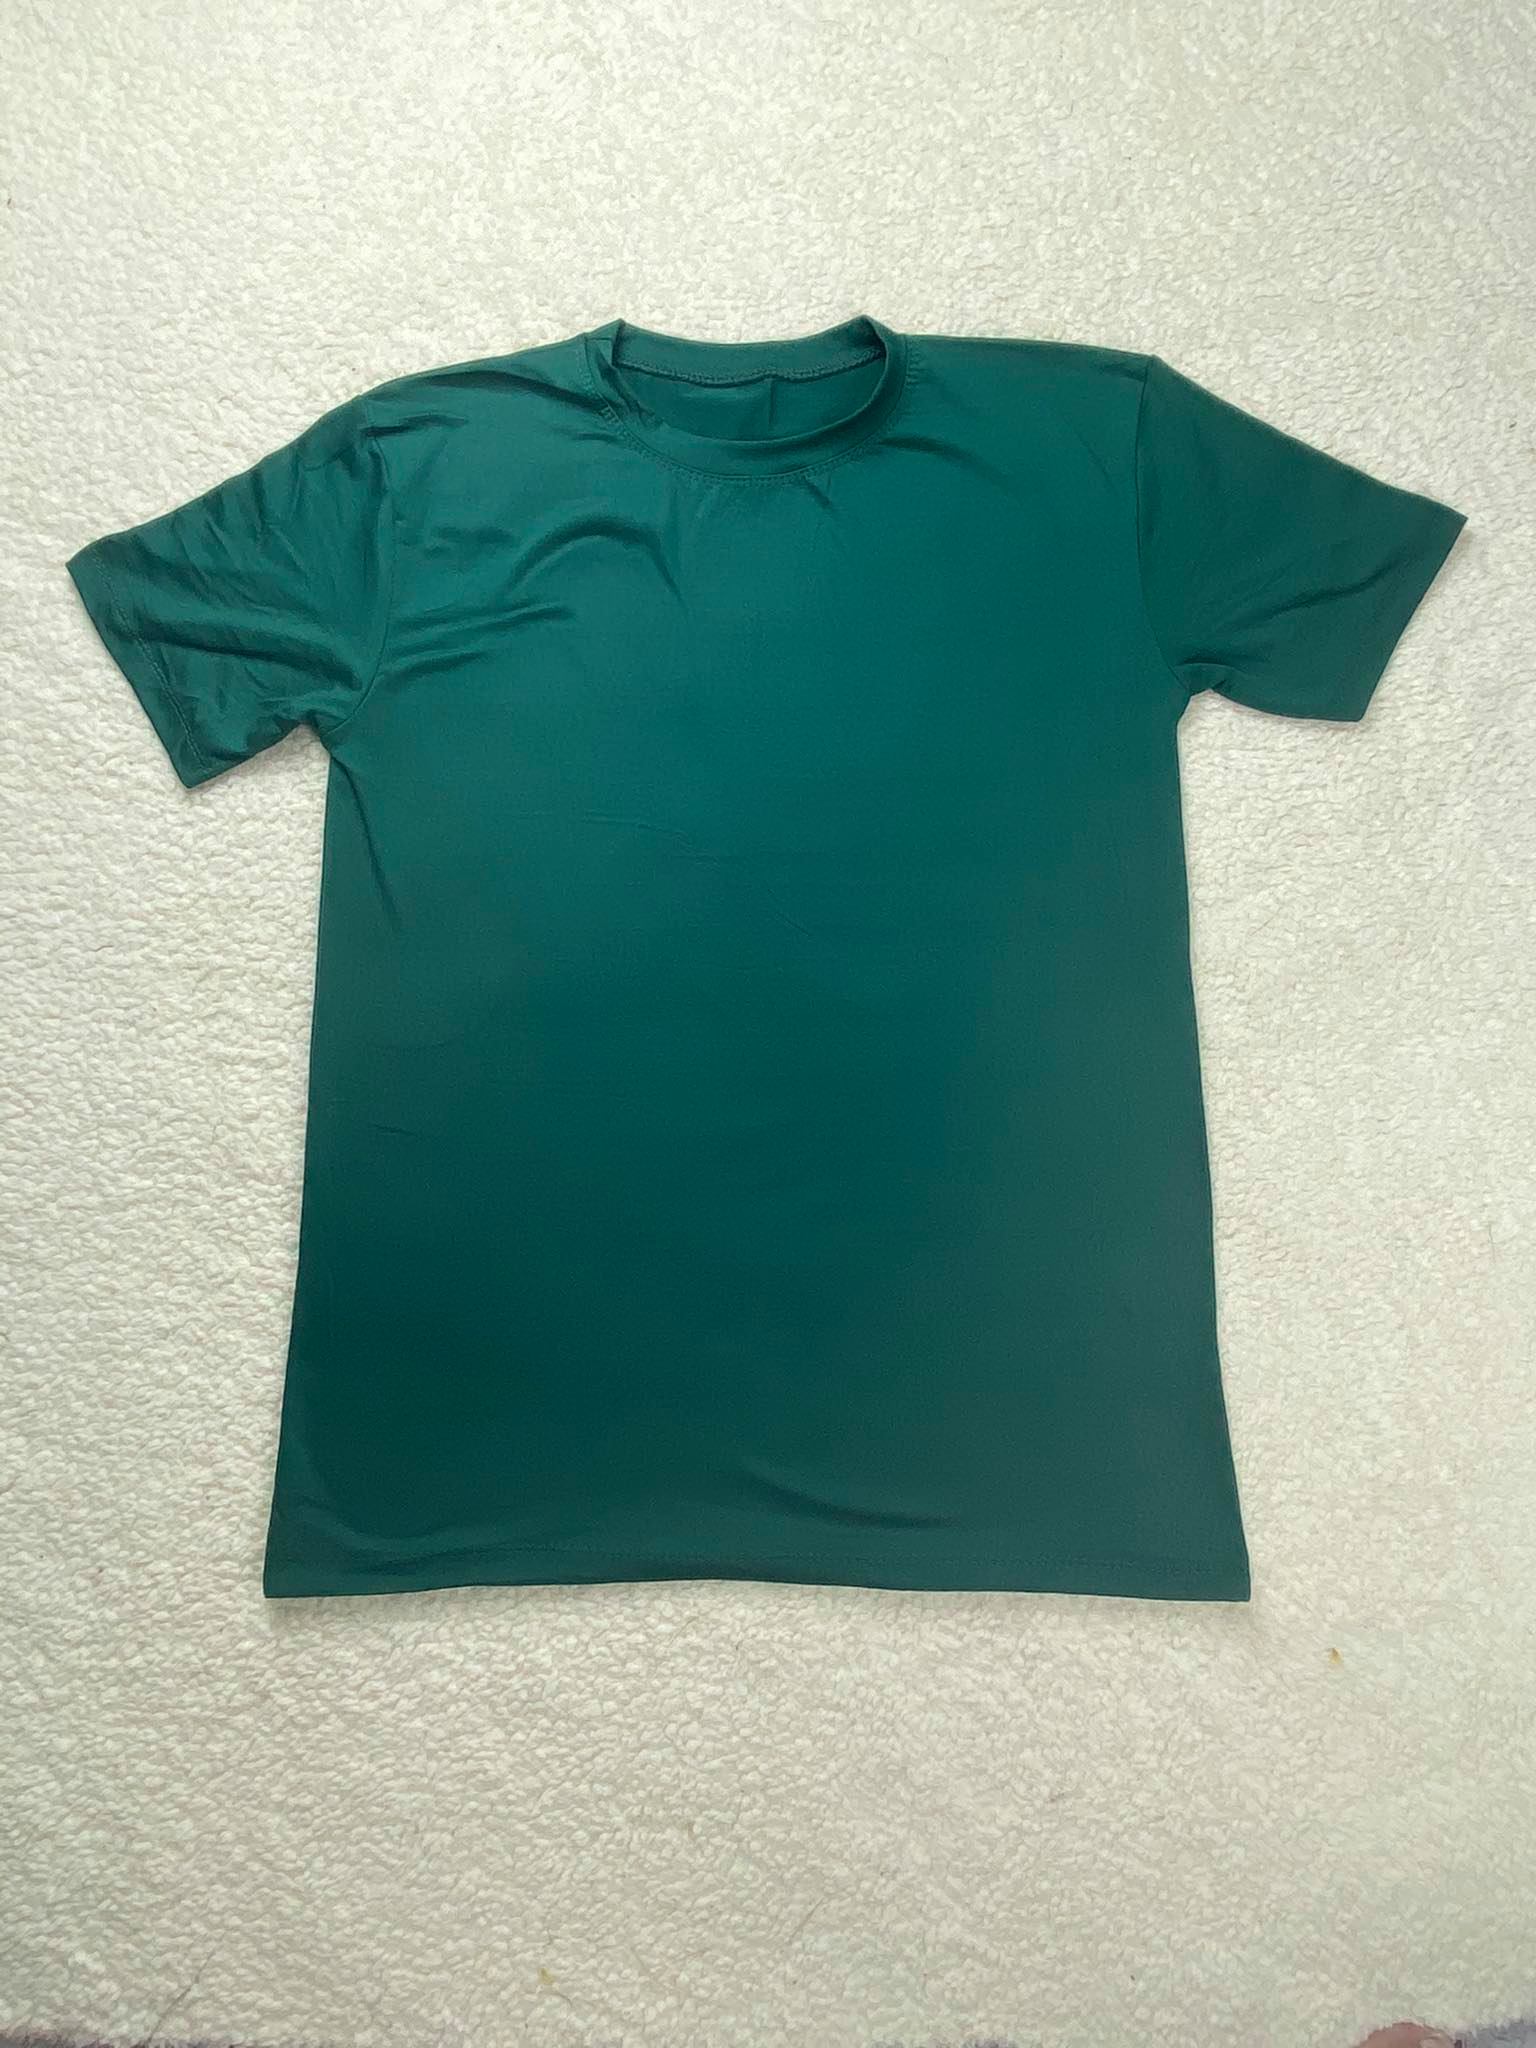 Chia sẻ 68 uniqlo tee shirt sizing siêu đỉnh  trieuson5